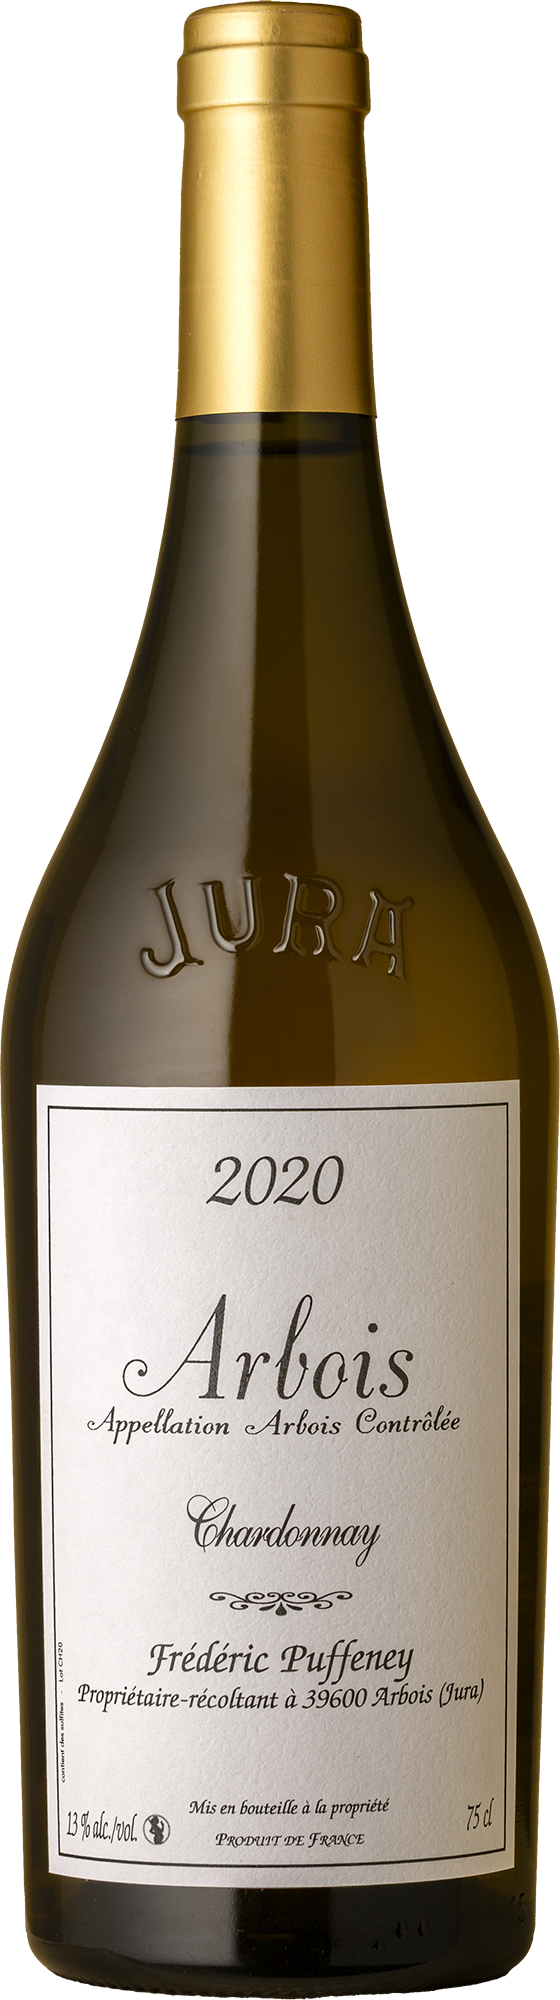 Frederic Puffeney - Chardonnay 2020 White Wine